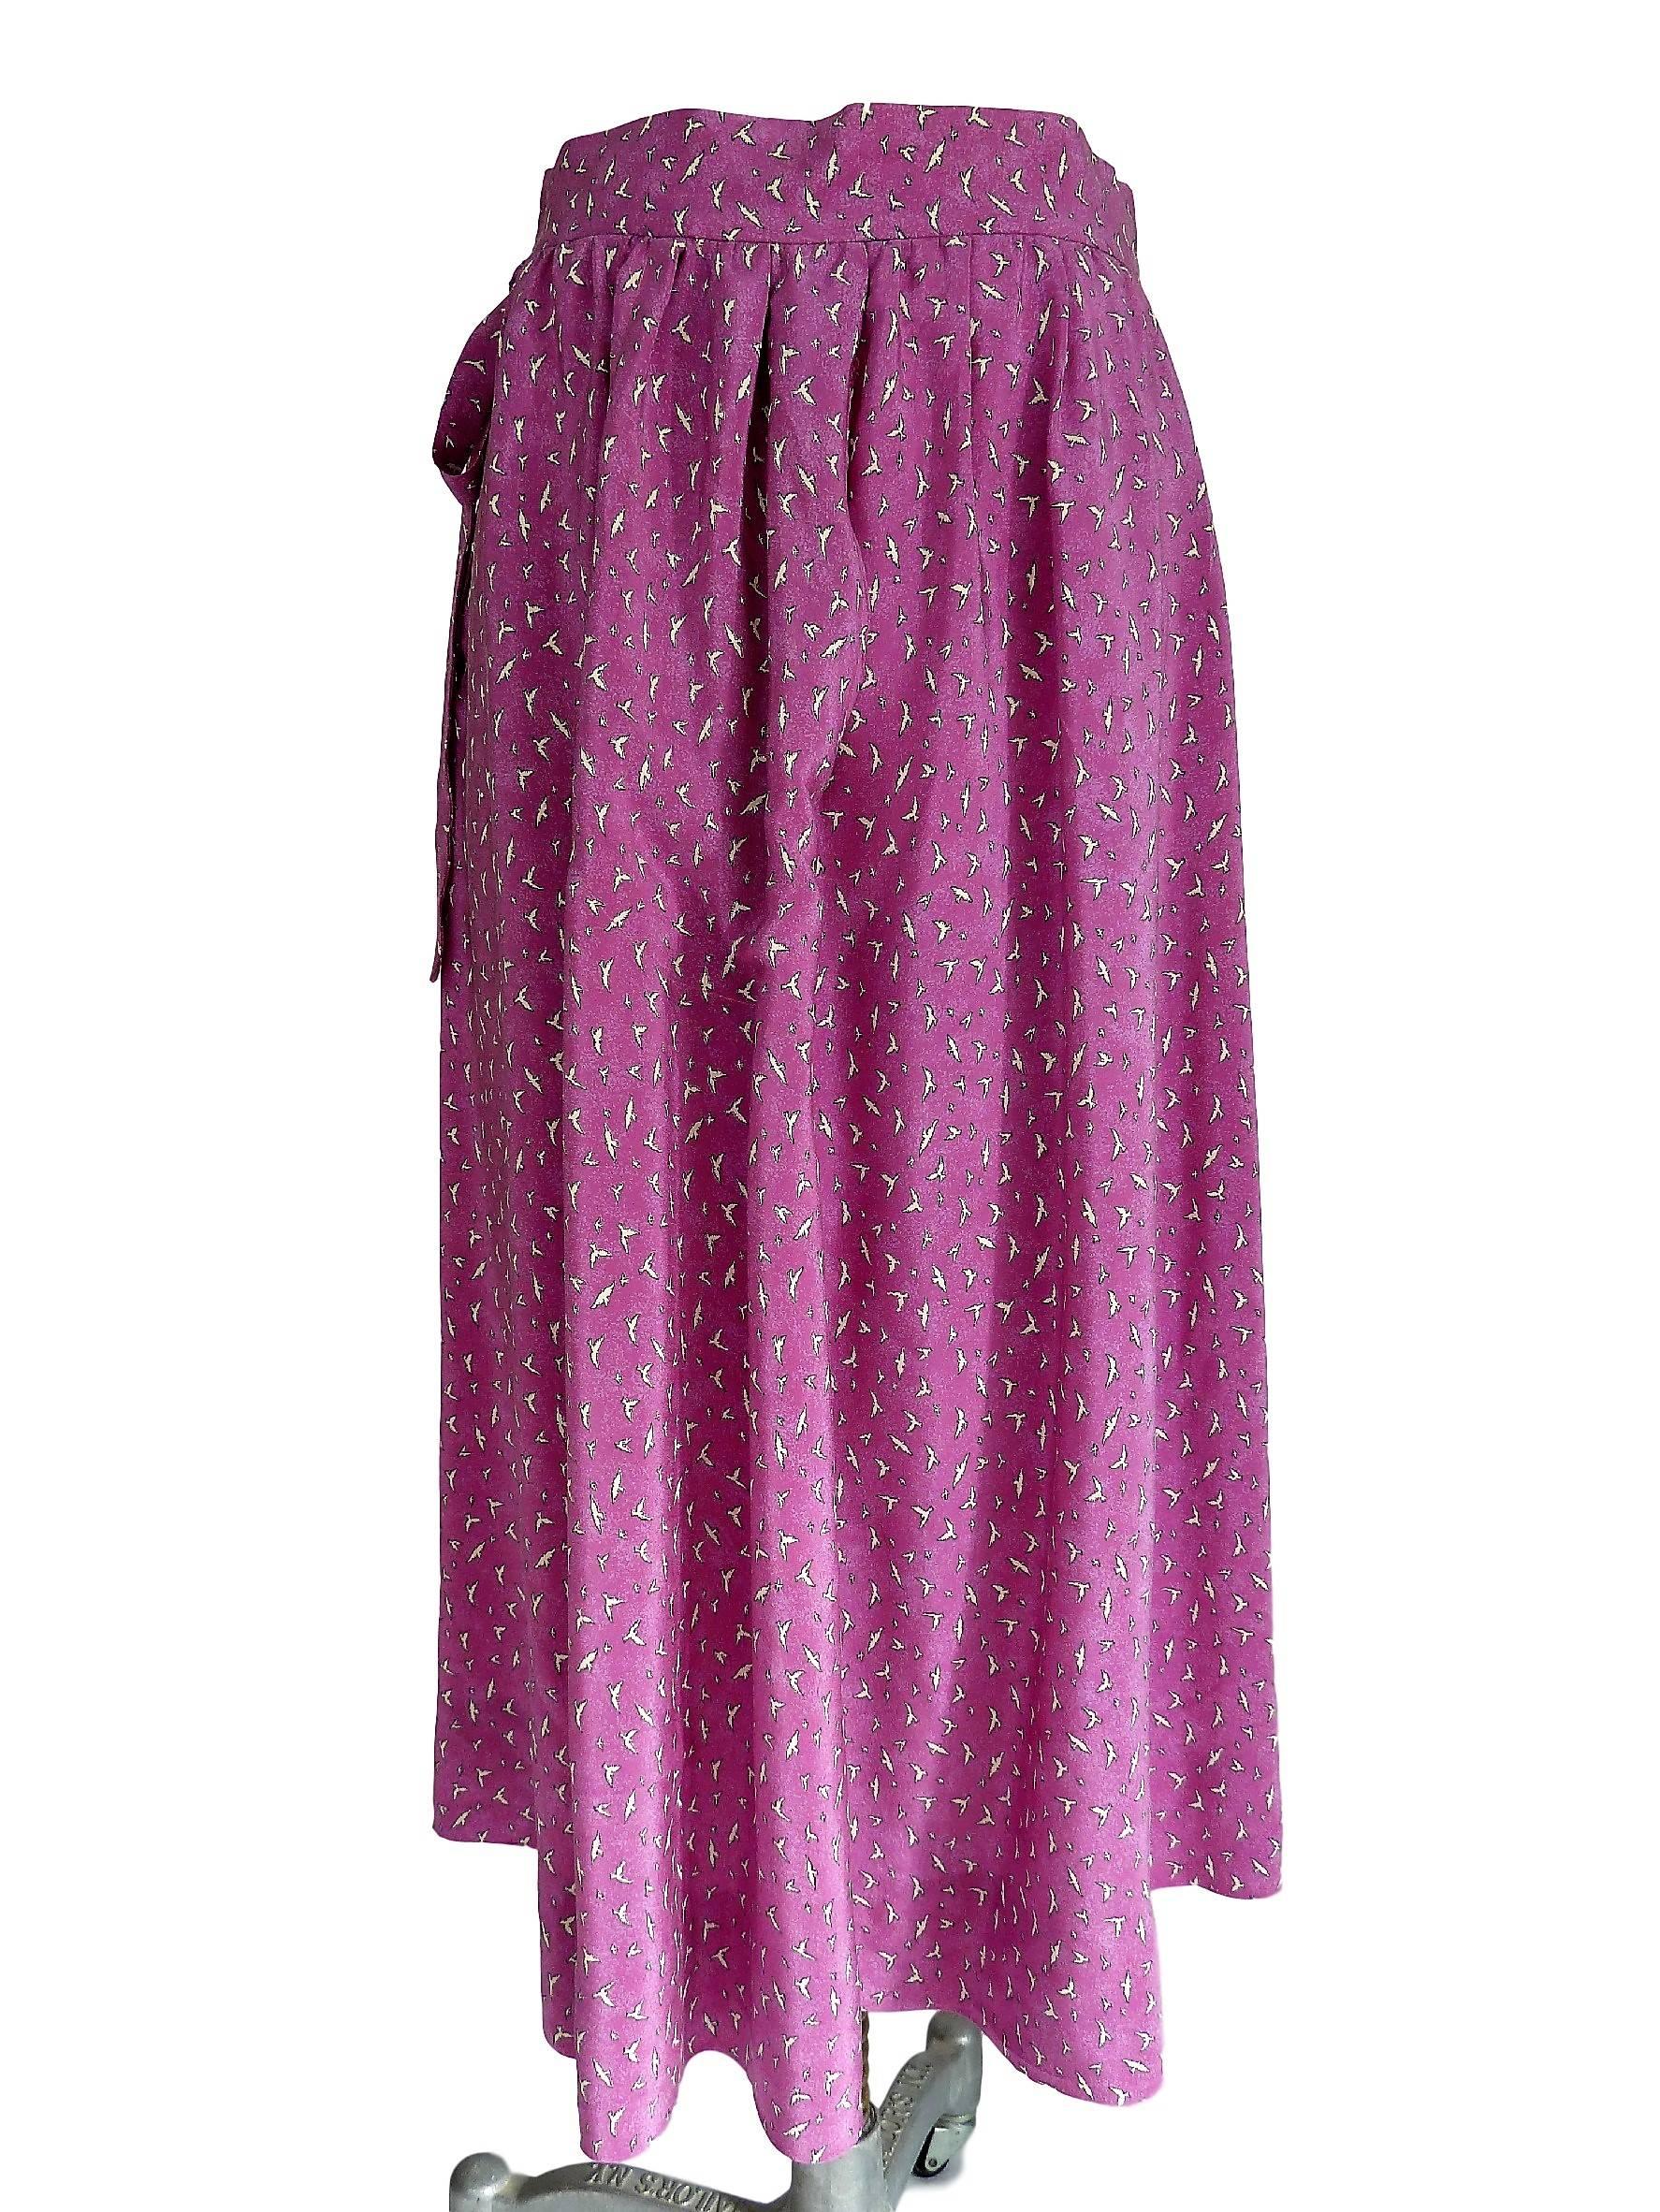 Marina Ferrari 1970s dress set 100% silk jacket blouse and skirt pink size 42 For Sale 1